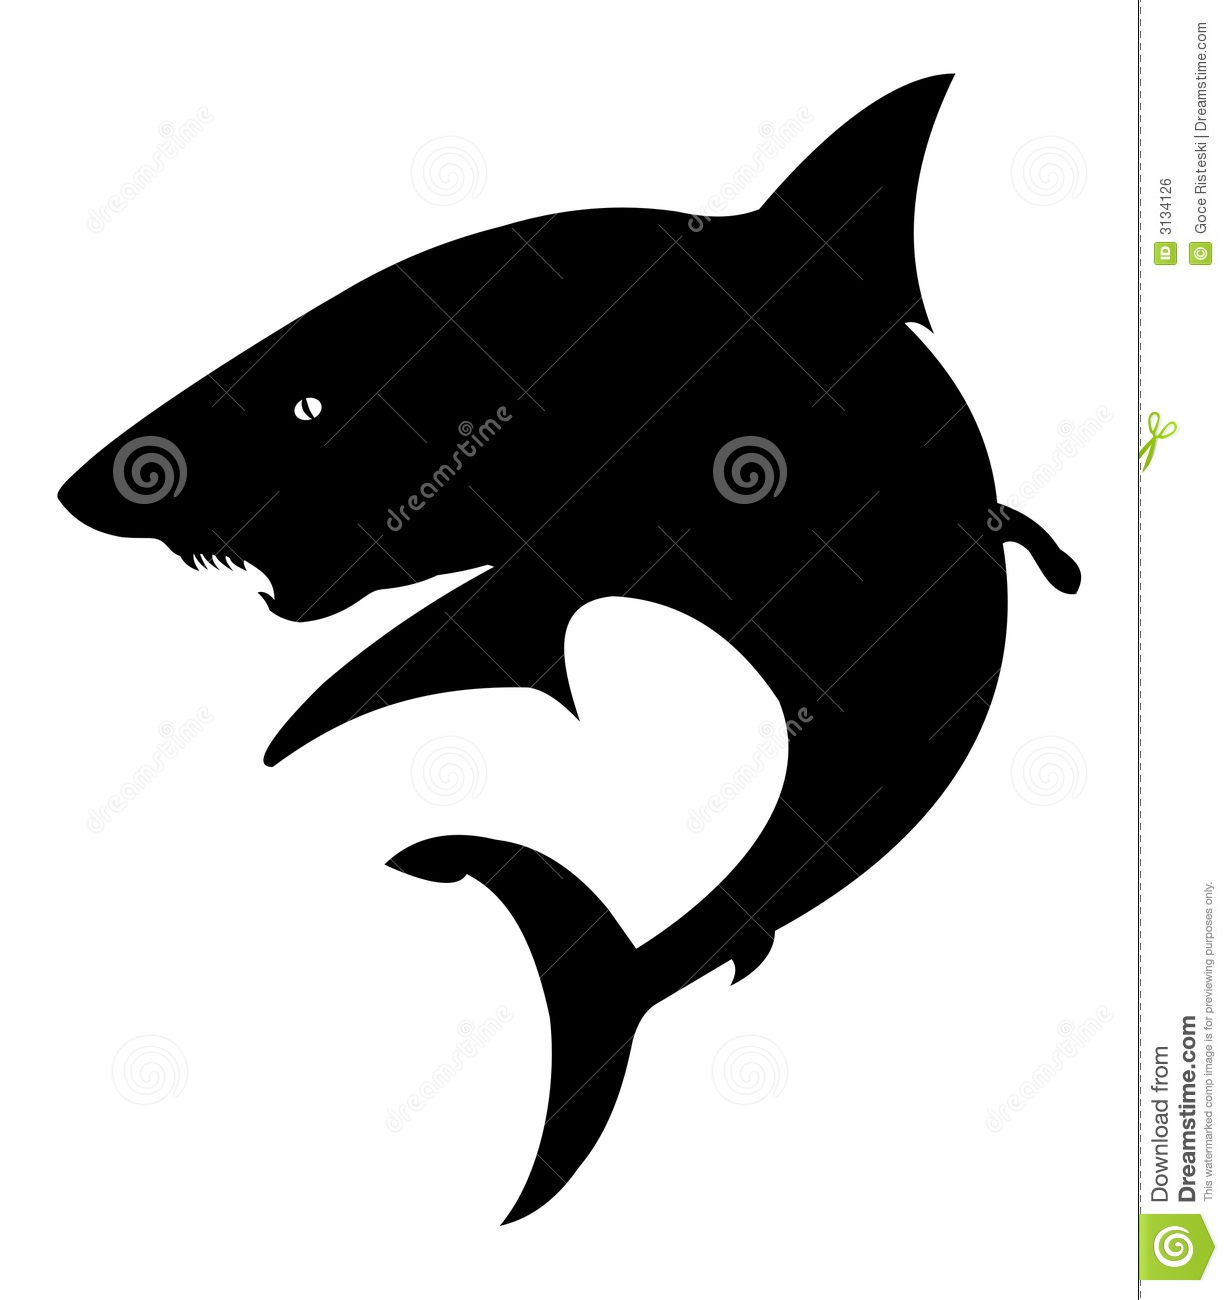 Shark Silhouette Royalty Free Stock Image   Image  3134126